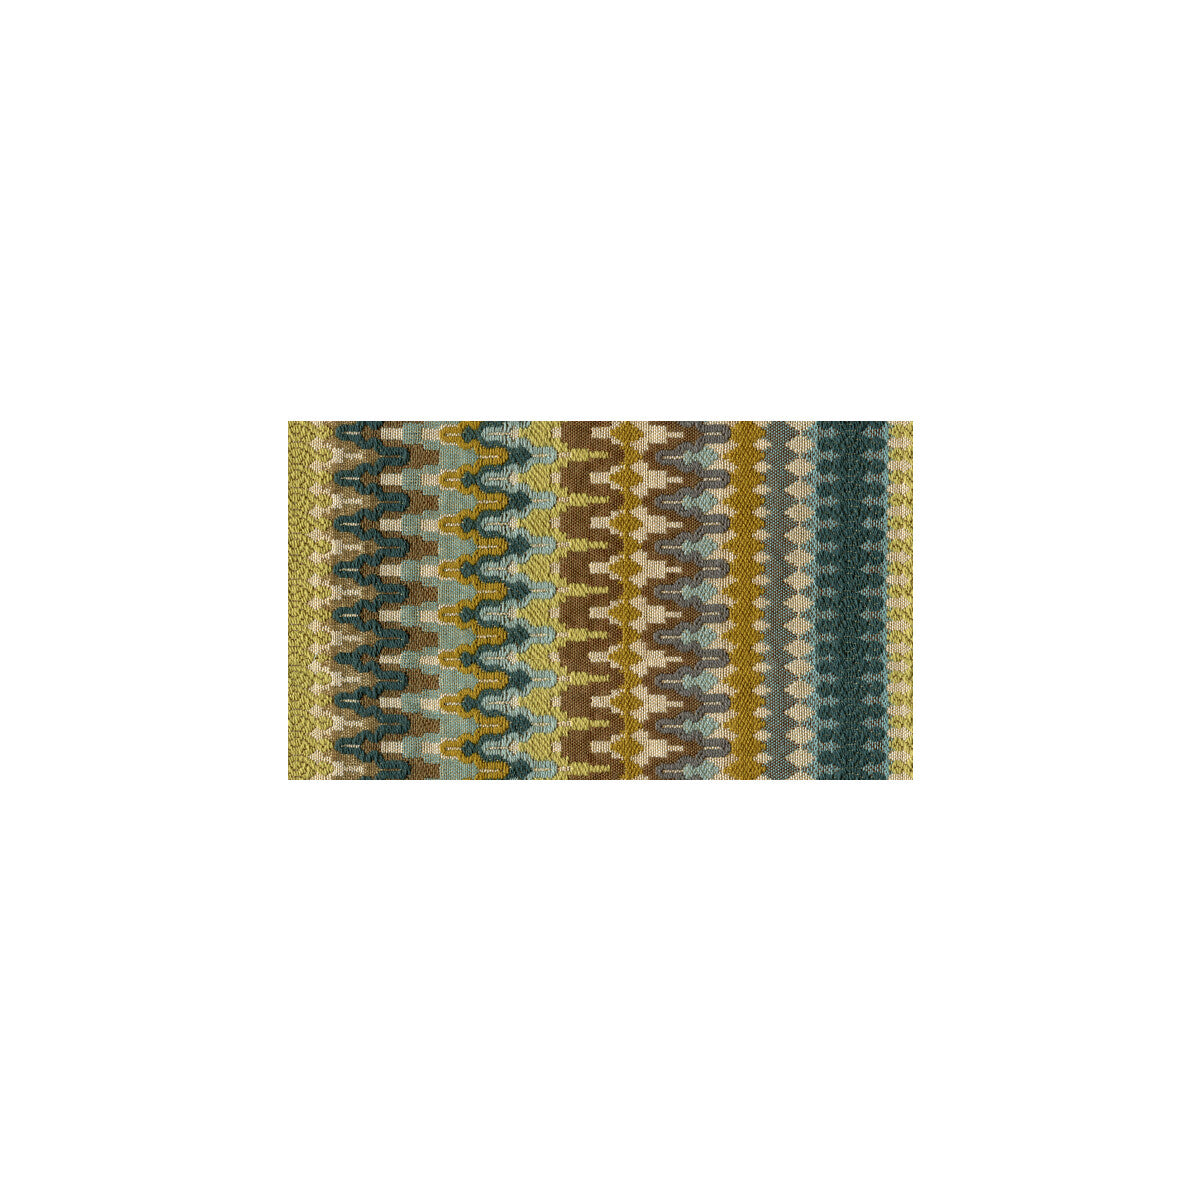 Kravet Design fabric in 32530-315 color - pattern 32530.315.0 - by Kravet Design in the Gis collection